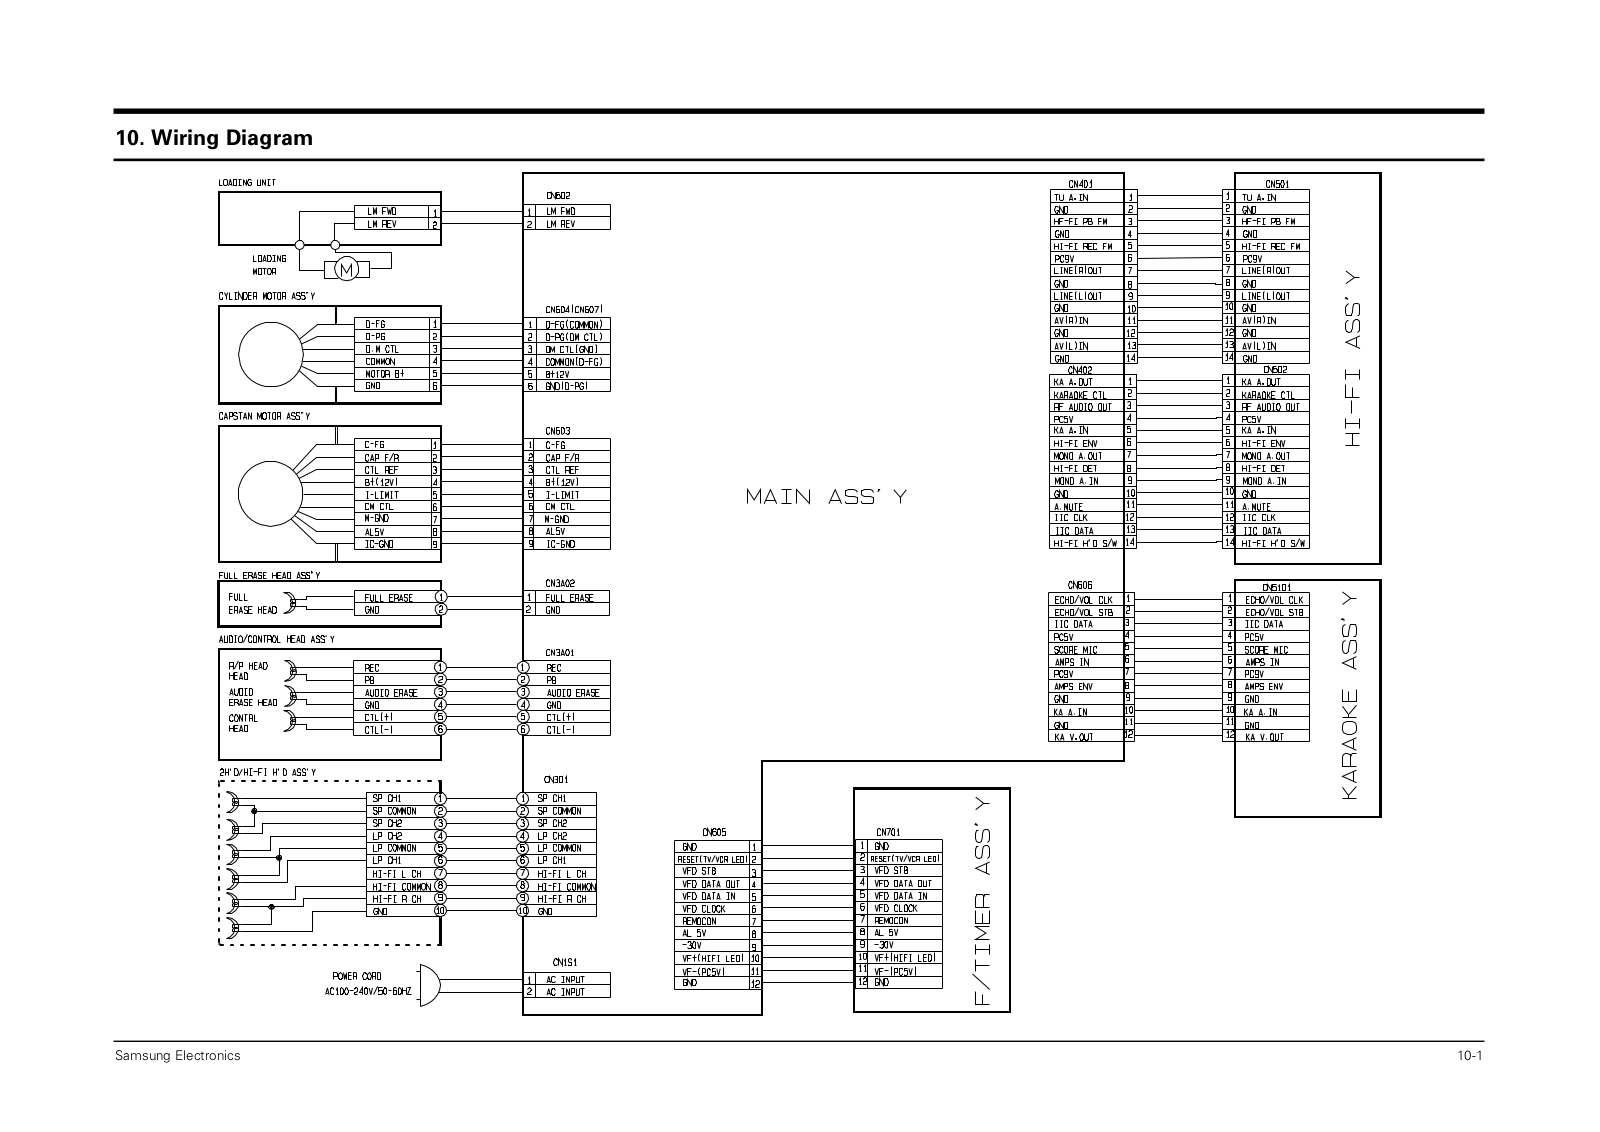 Samsung SVR-77H, SV-A17GV-CIS-C Wiring Diagram